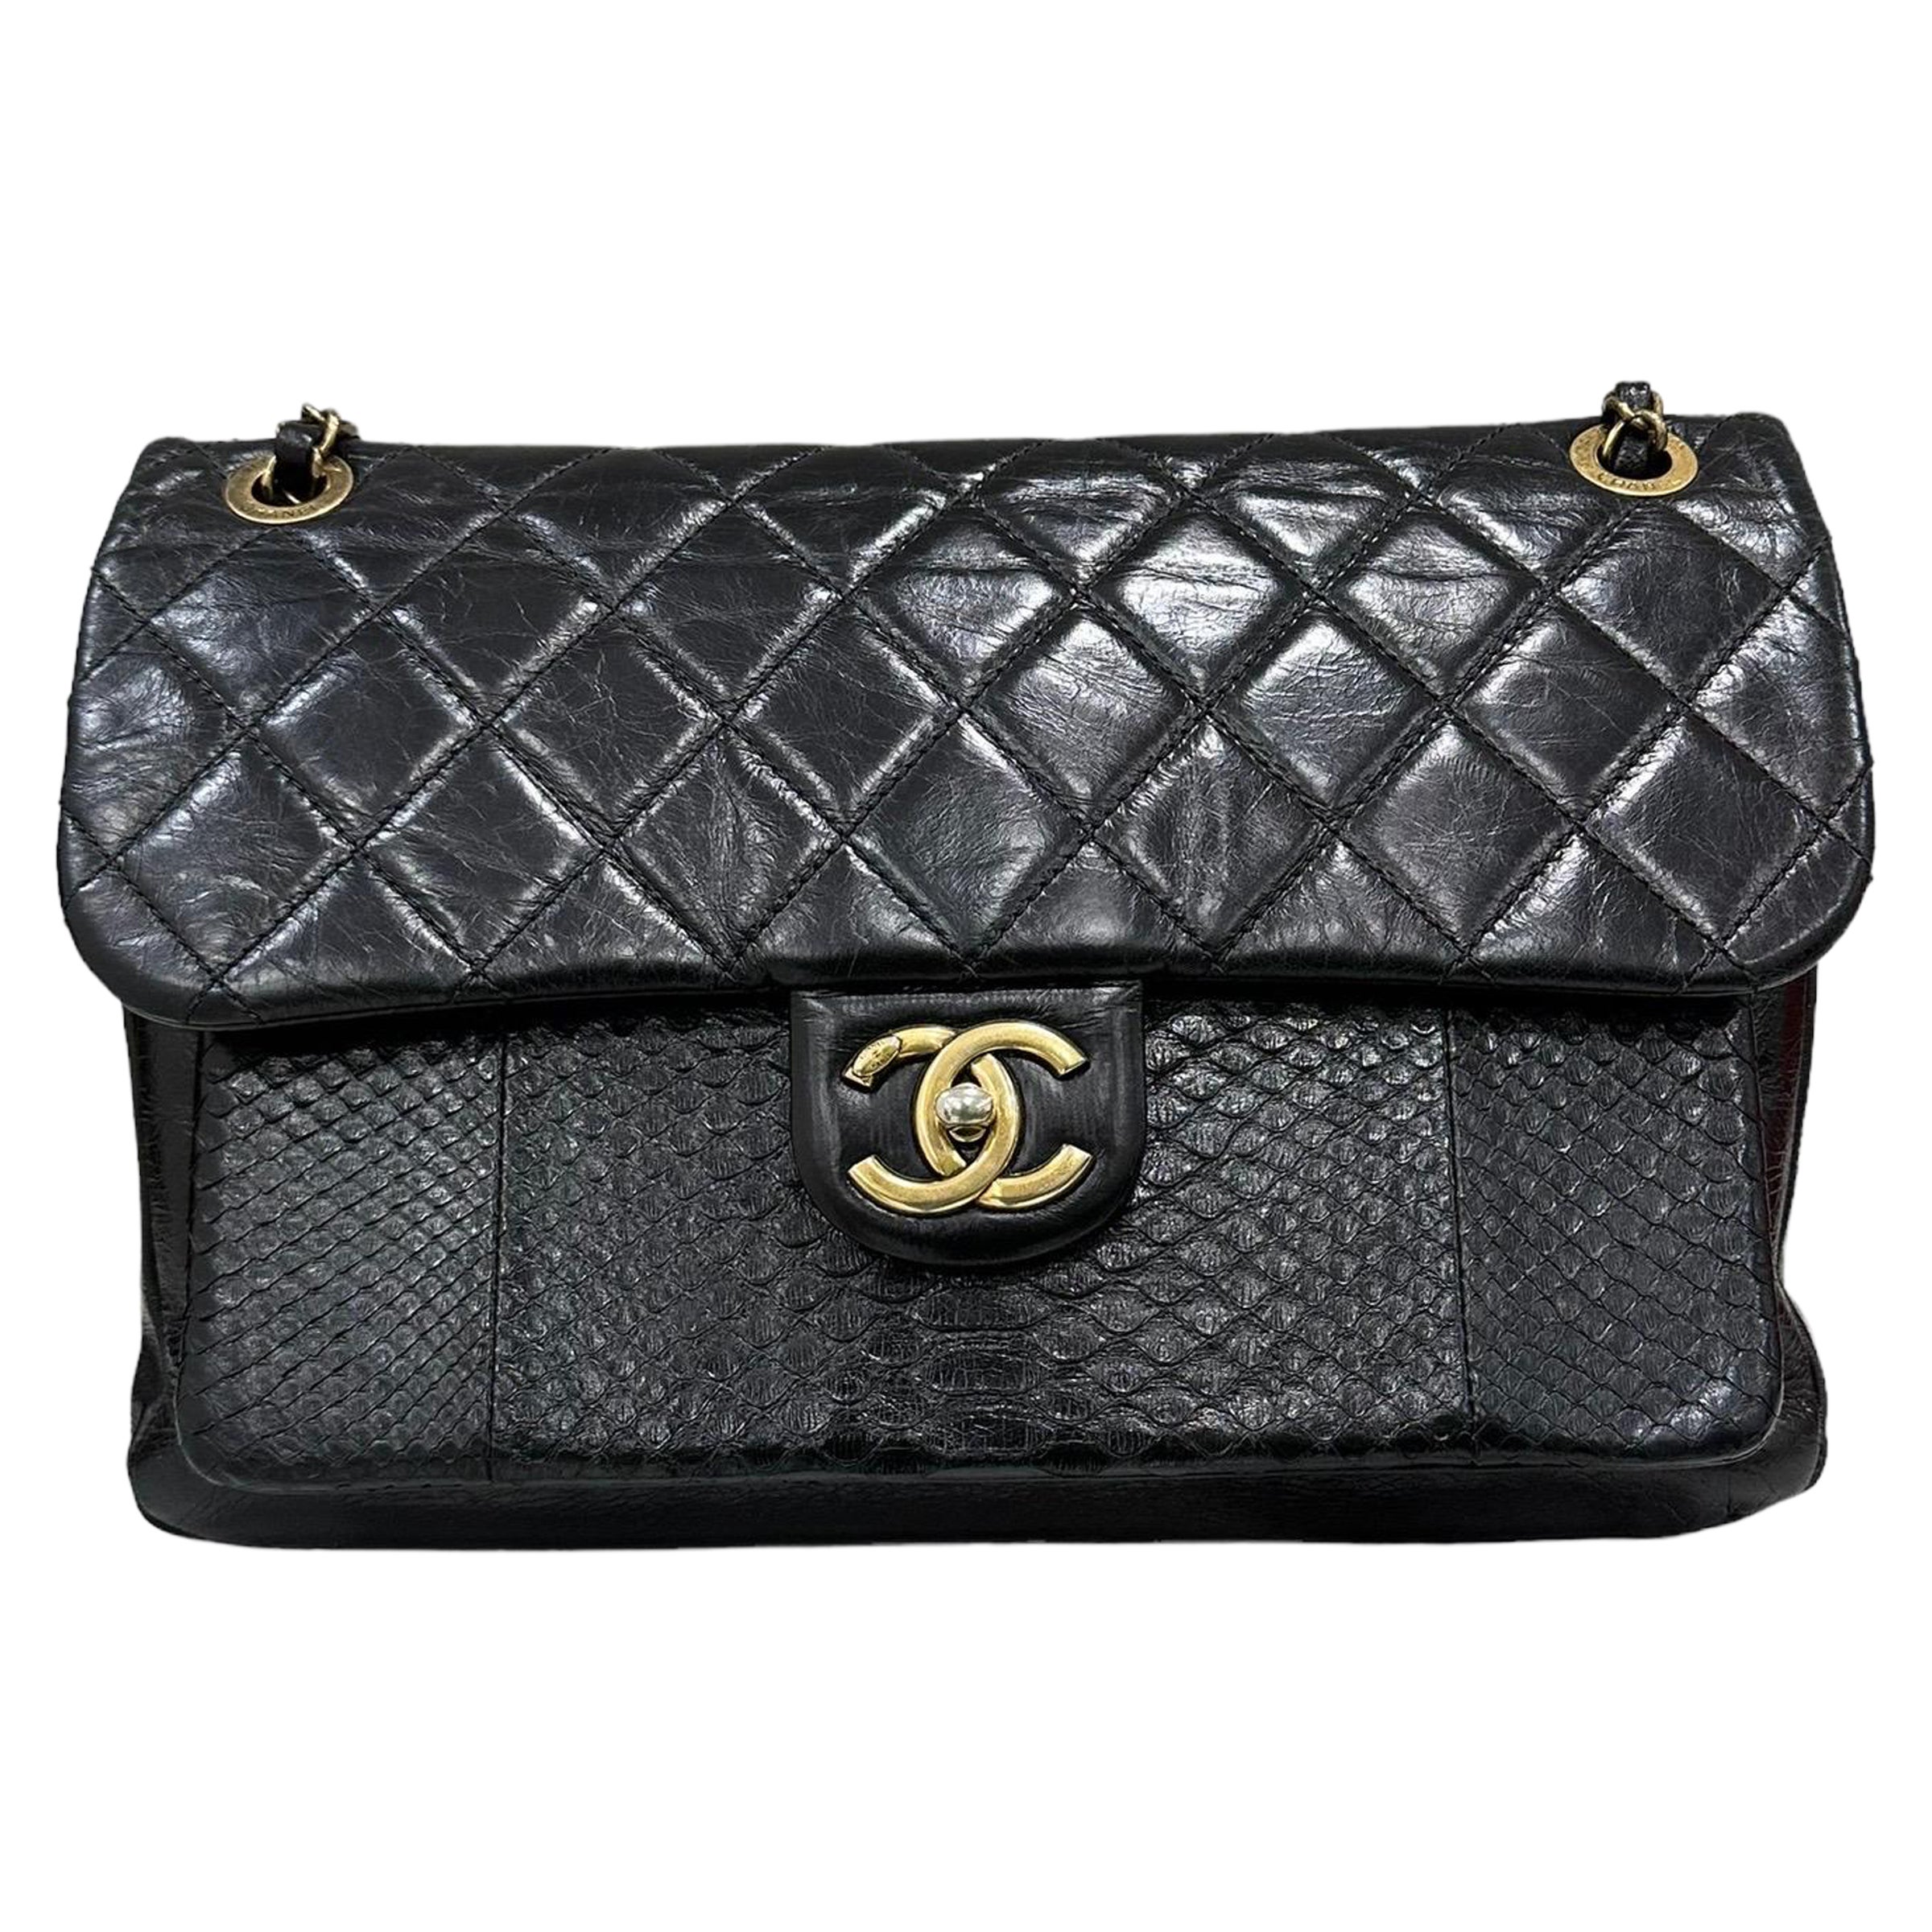 2016 Chanel Urban Mix  Flap Black Quilted Leather Shoulder Bag For Sale